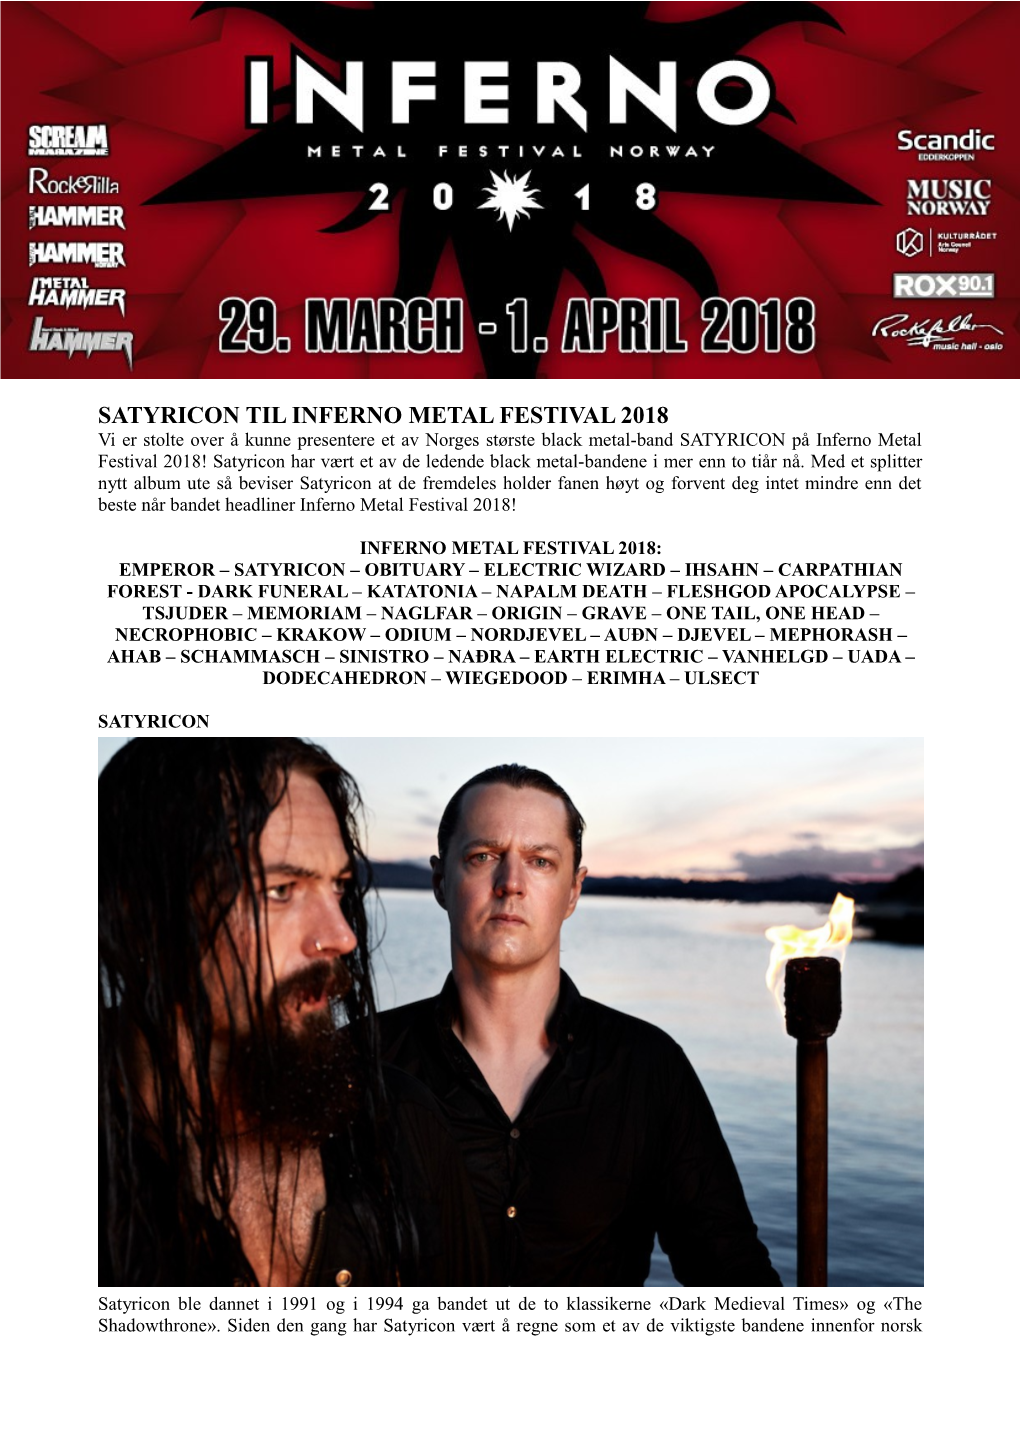 Satyricon Til Inferno Metal Festival 2018